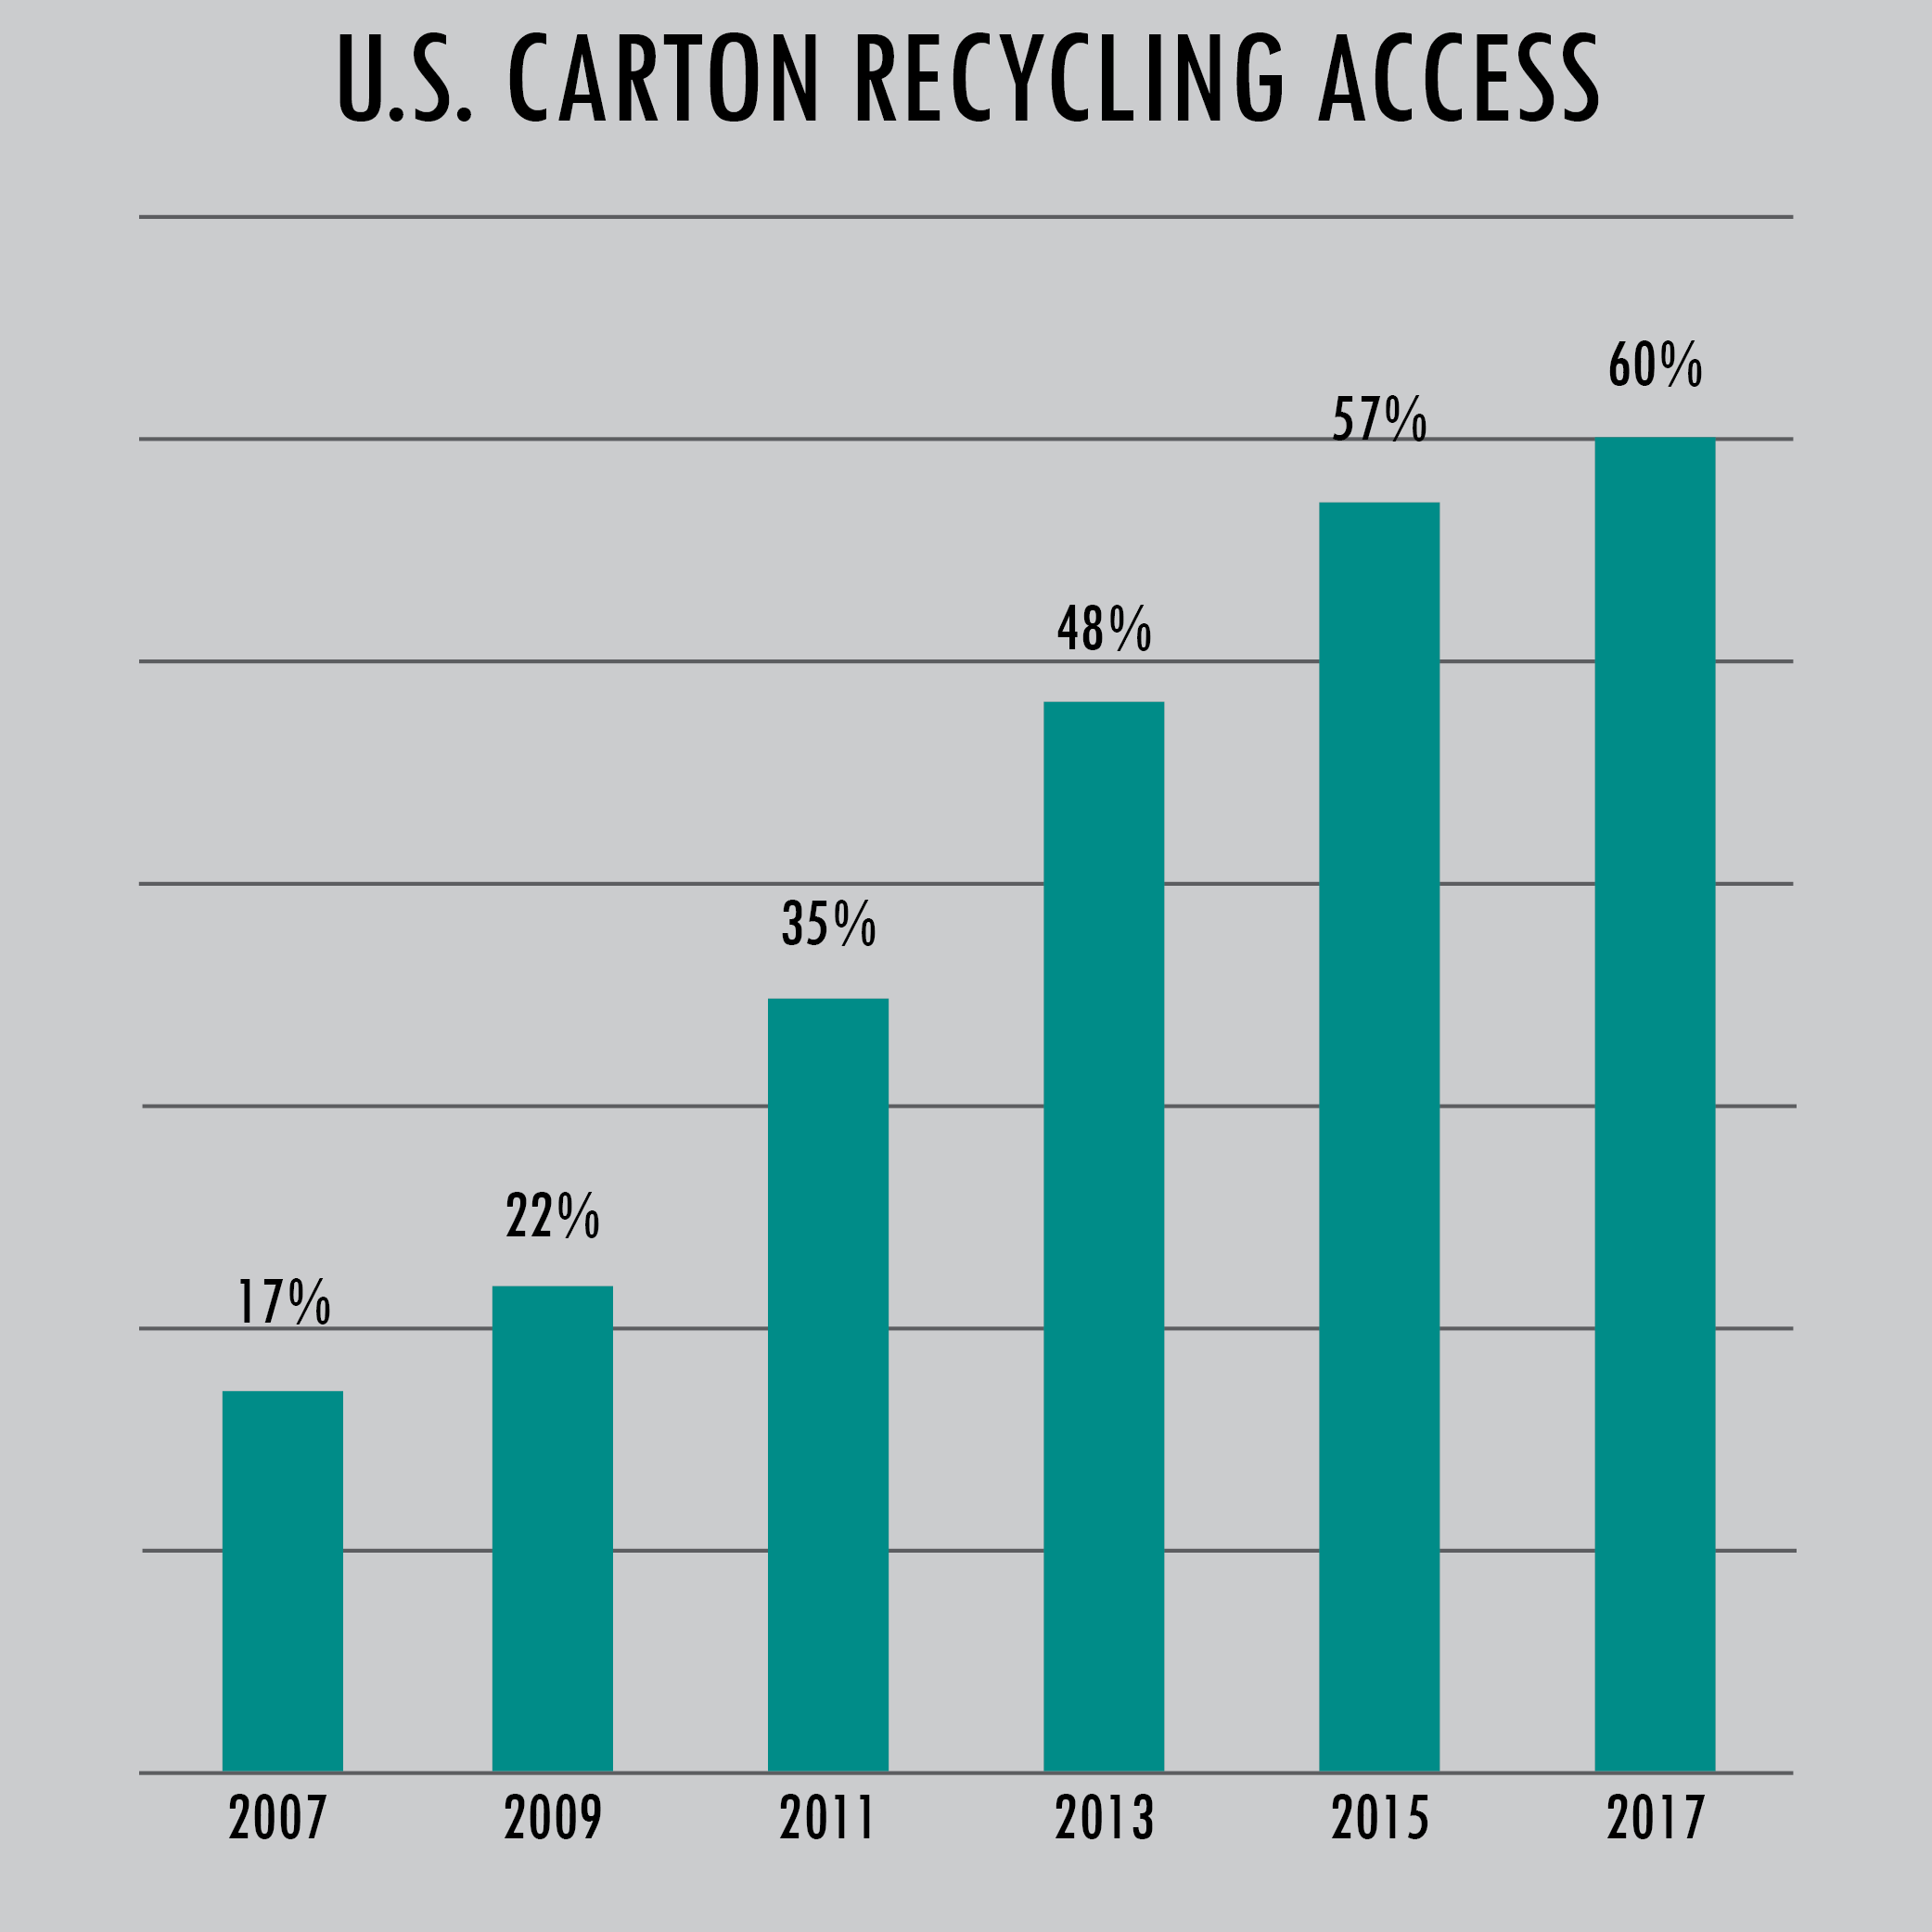 U.S. Carton Recycling Access (60% in 2017)